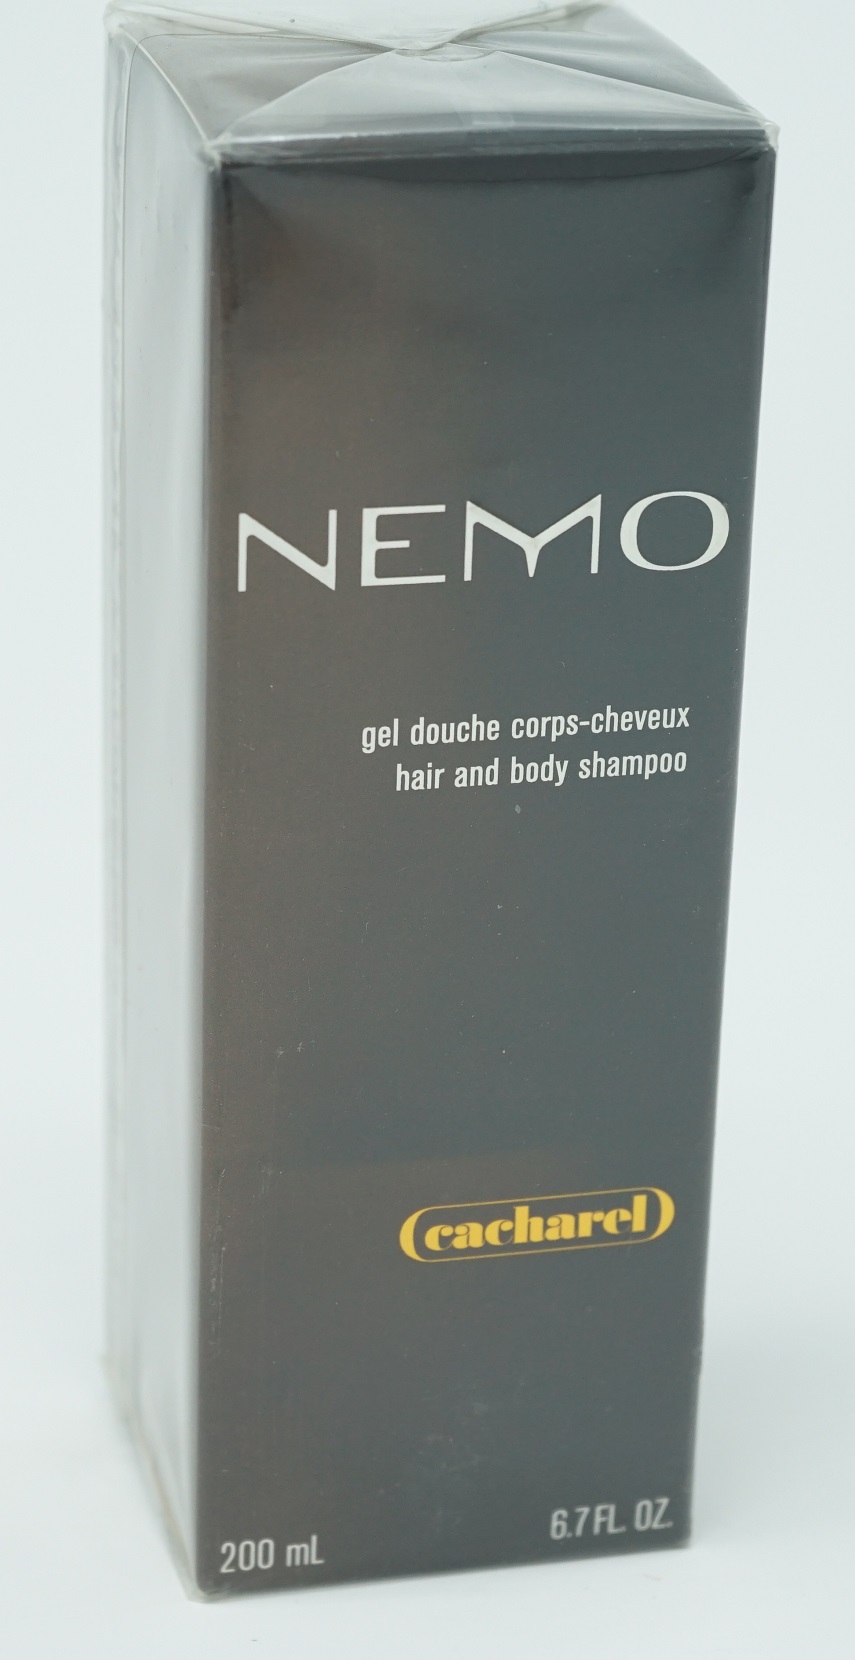 Cacharel NEMO 200 ml Hair and Body Shampoo